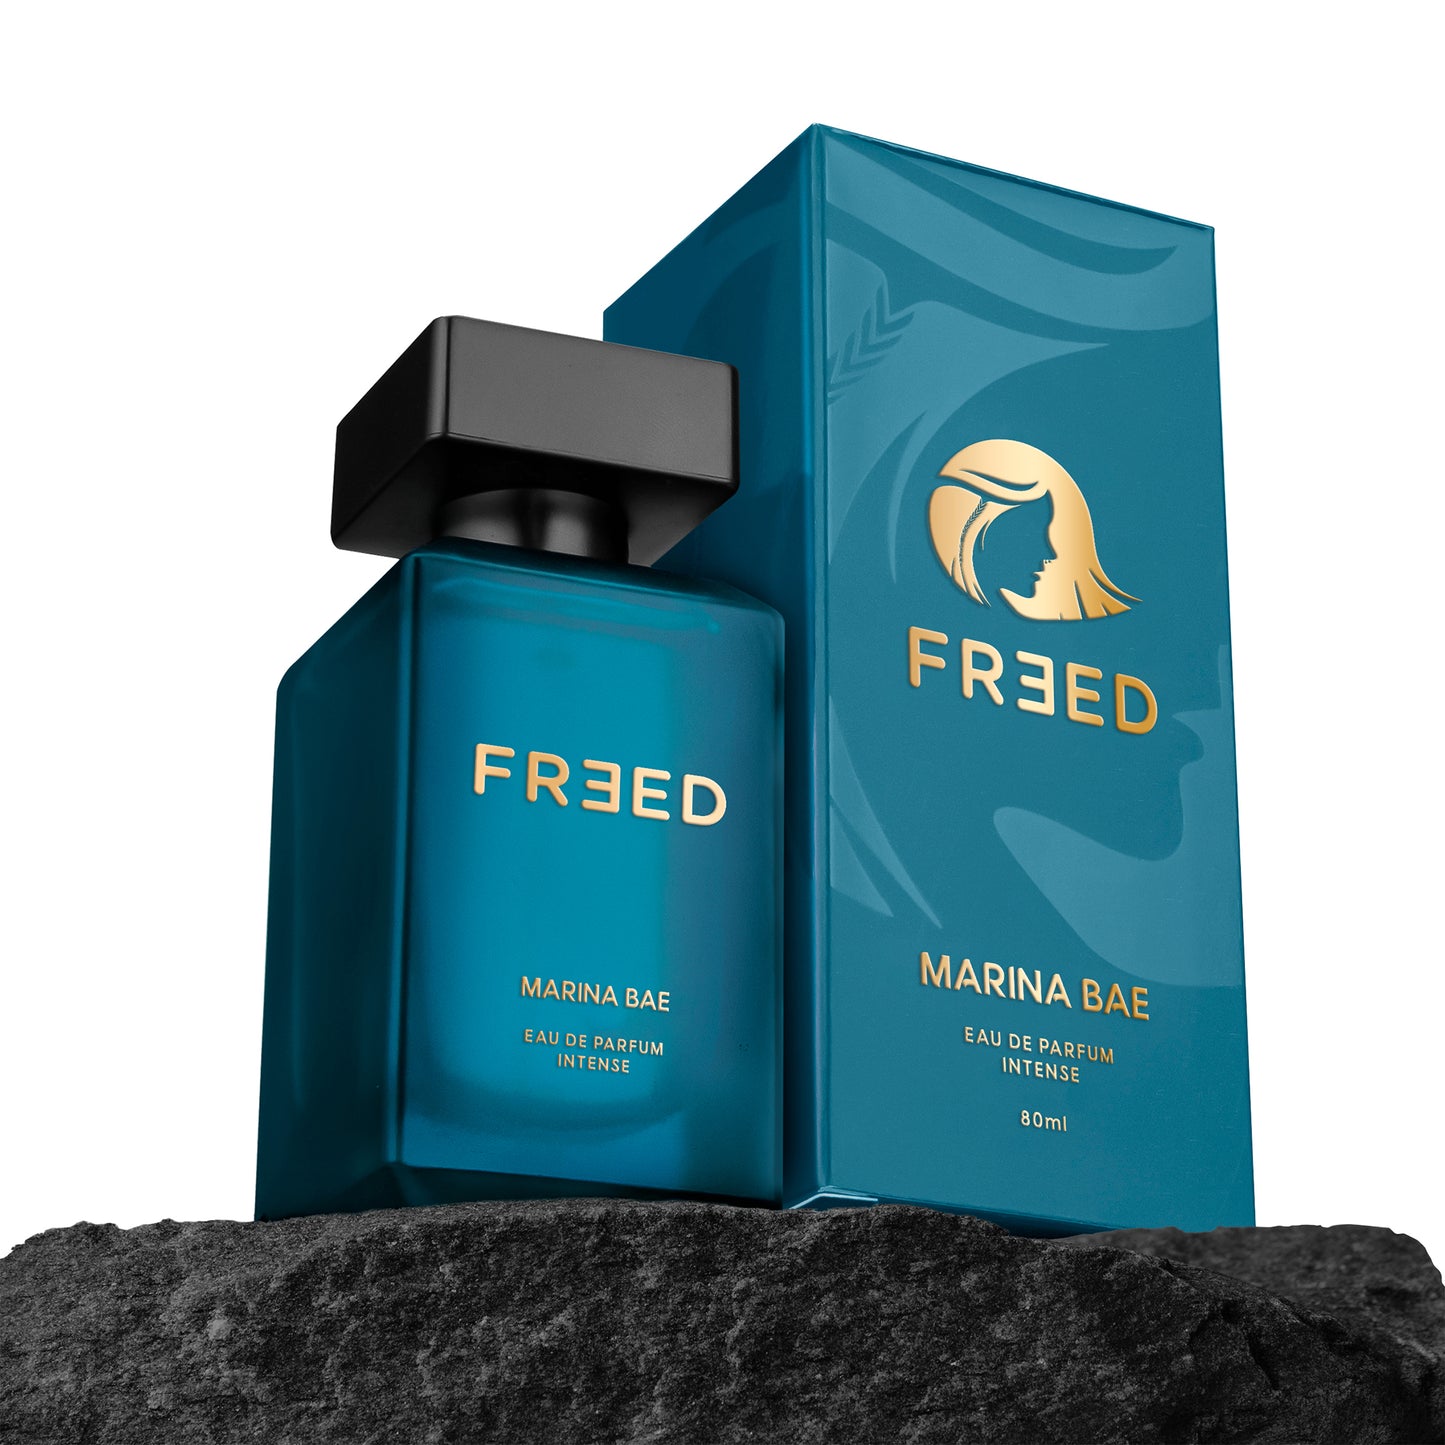 Freed Marina Bae Eau De Parfum Intense (80ml)